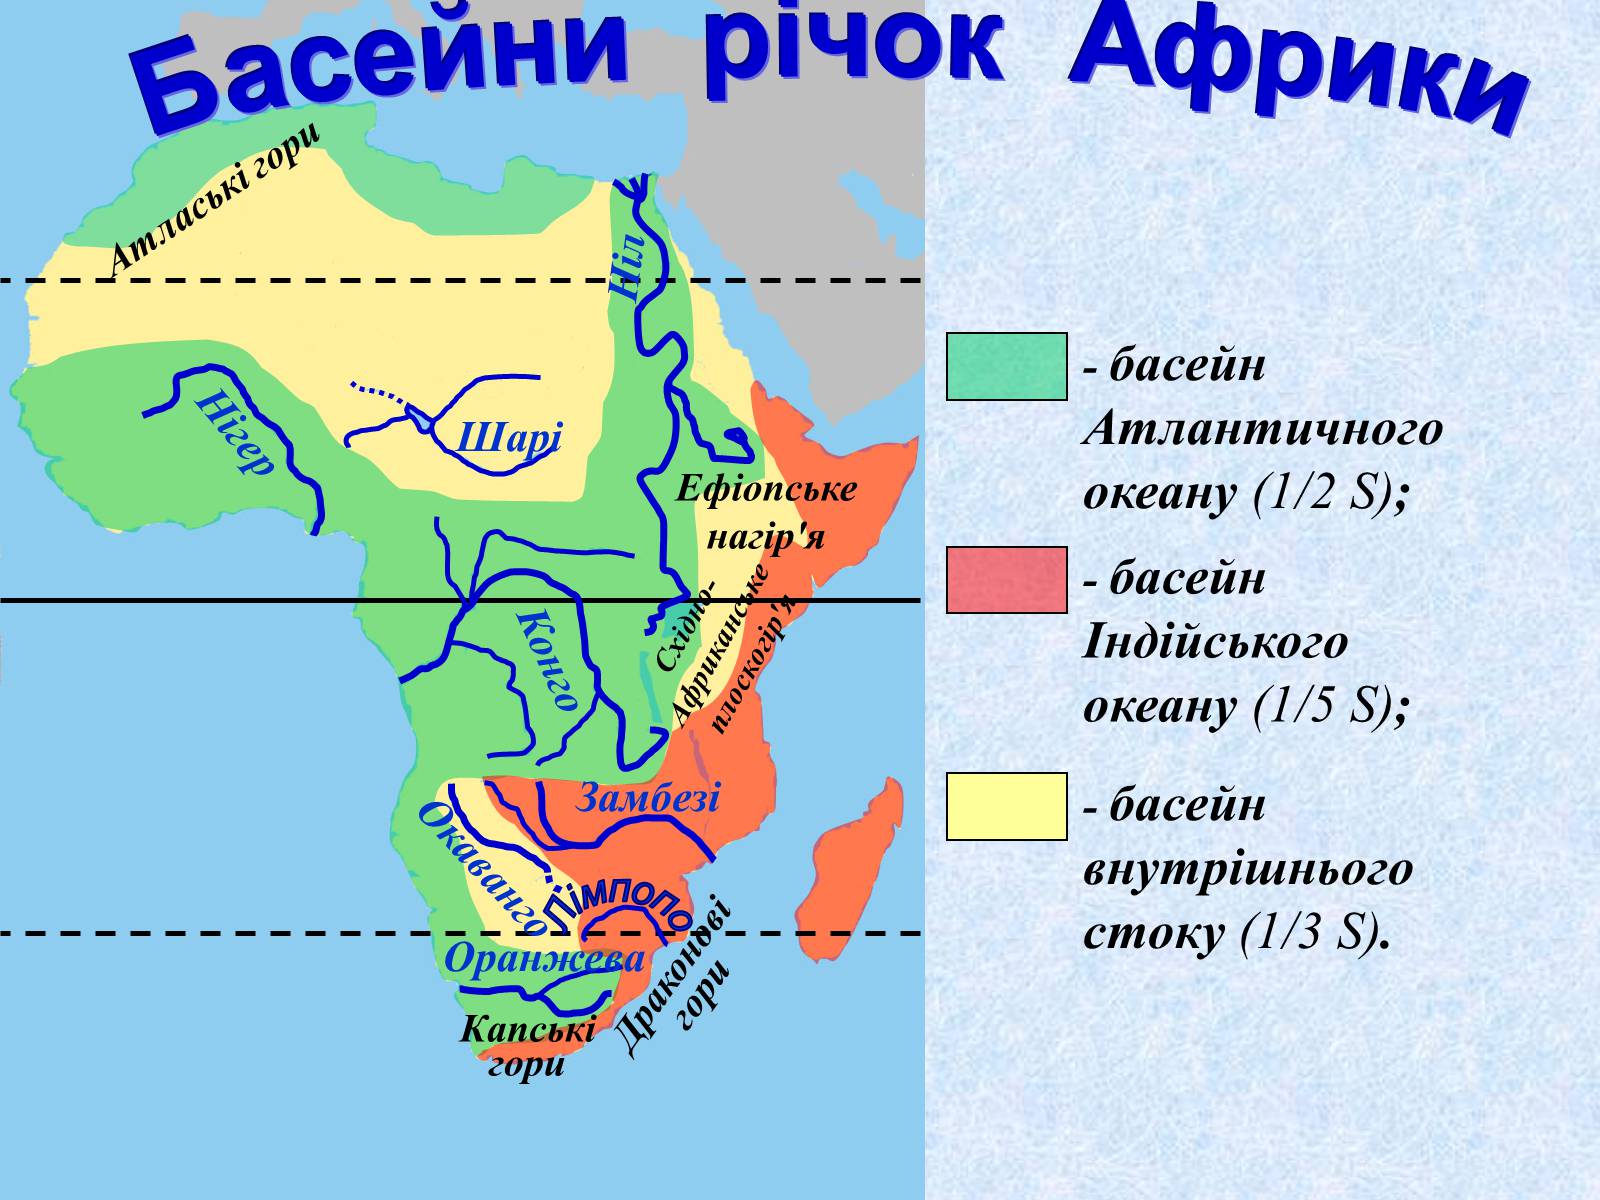 Бассейны рек Африки на карте